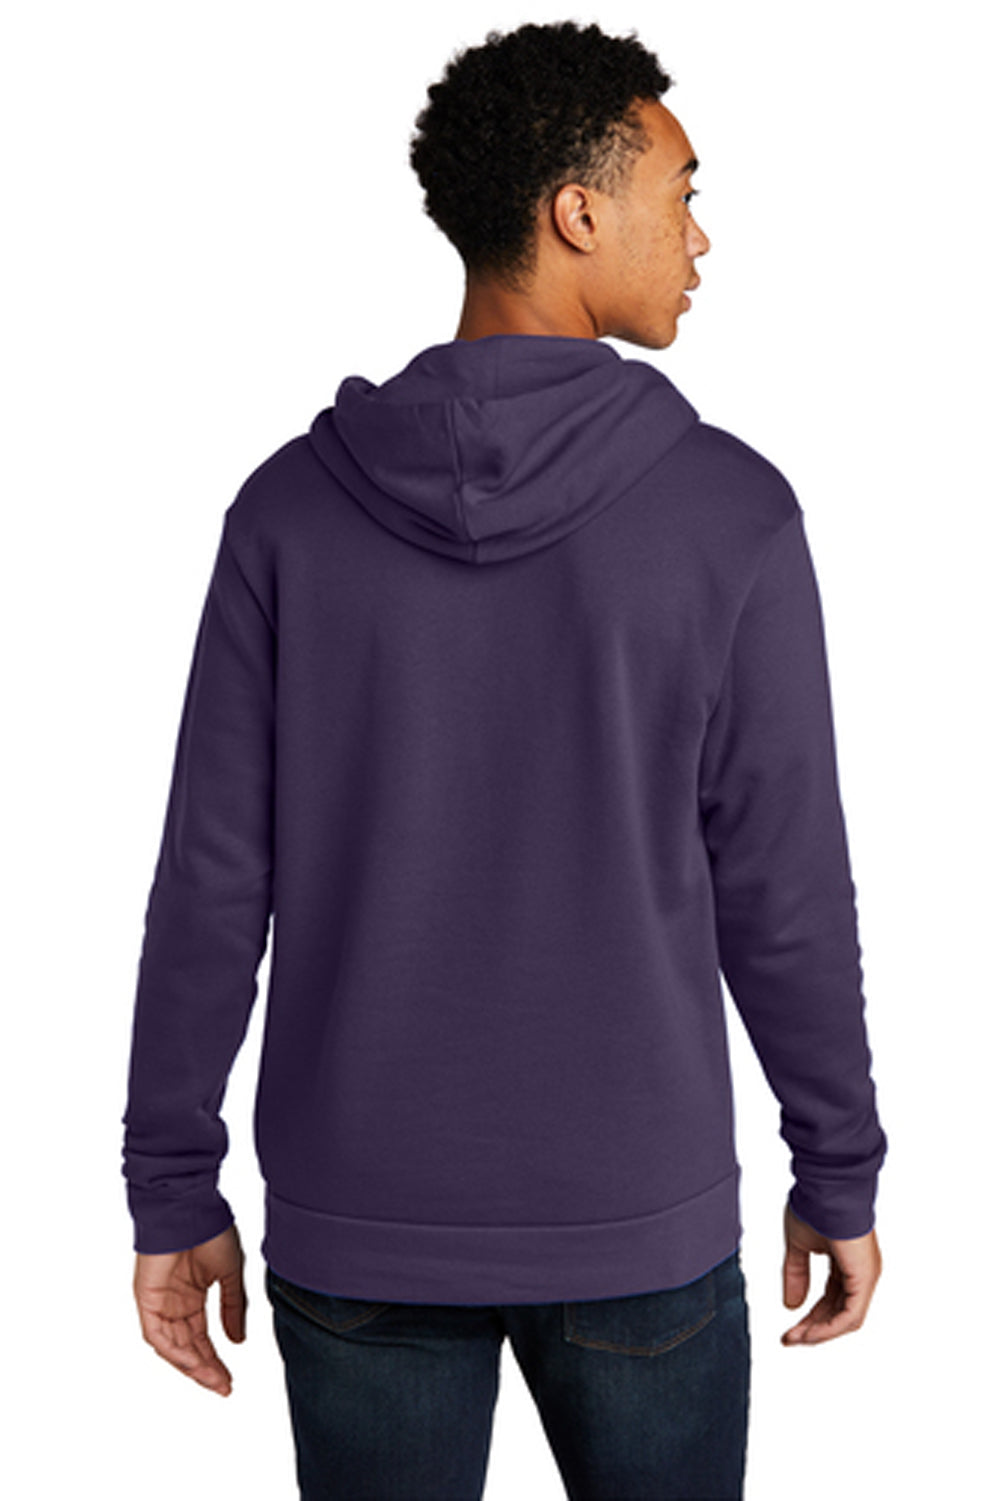 Next Level Mens Fleece Hooded Sweatshirt Hoodie Galaxy Purple Back